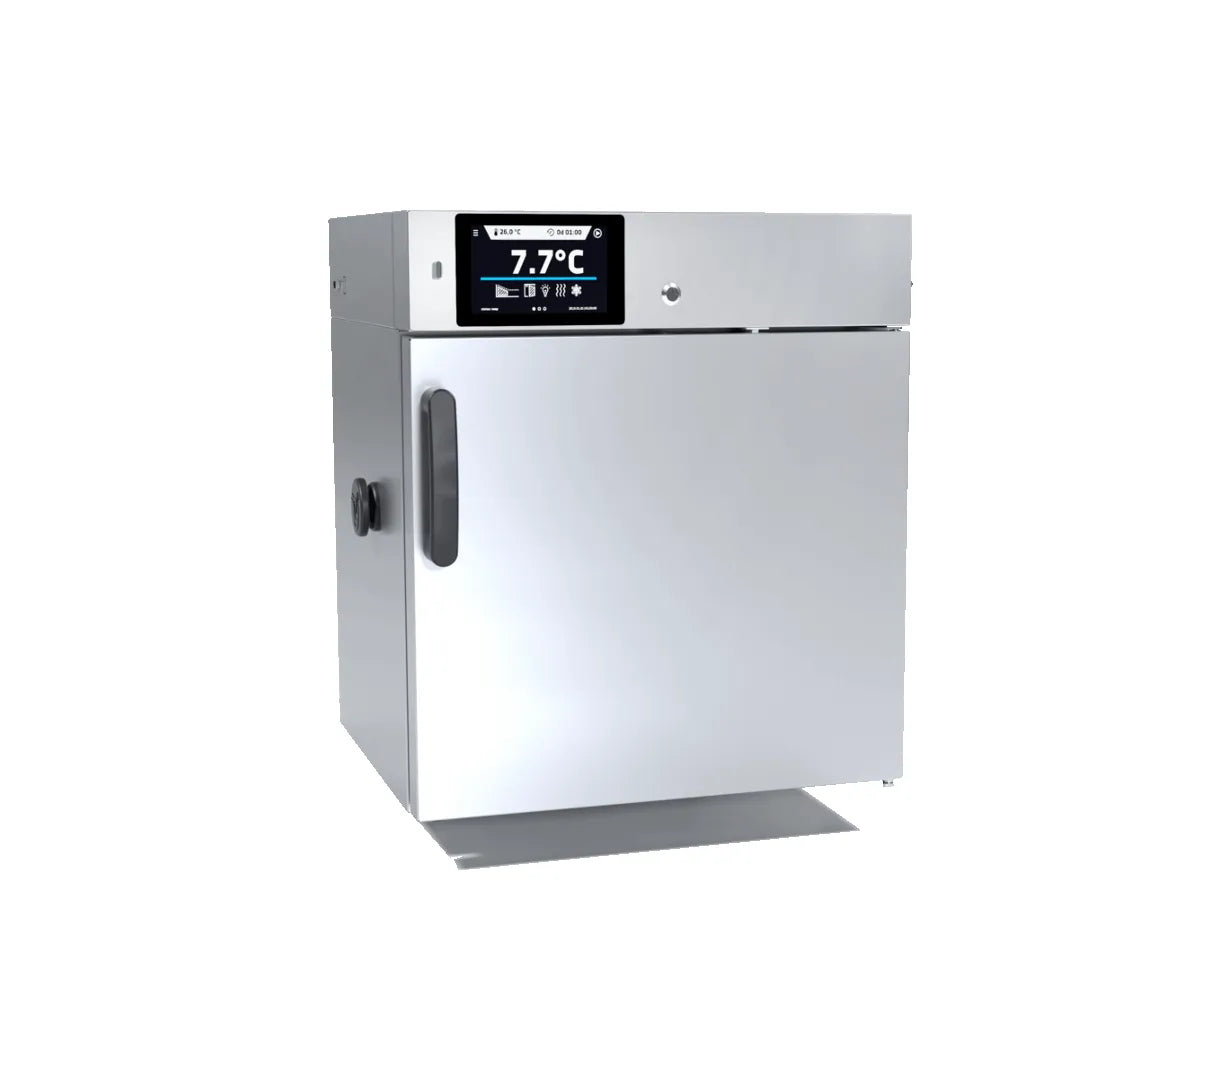 Laboratory refrigerator CHL 1 - chamber capacity 70 litres Pol-Eko